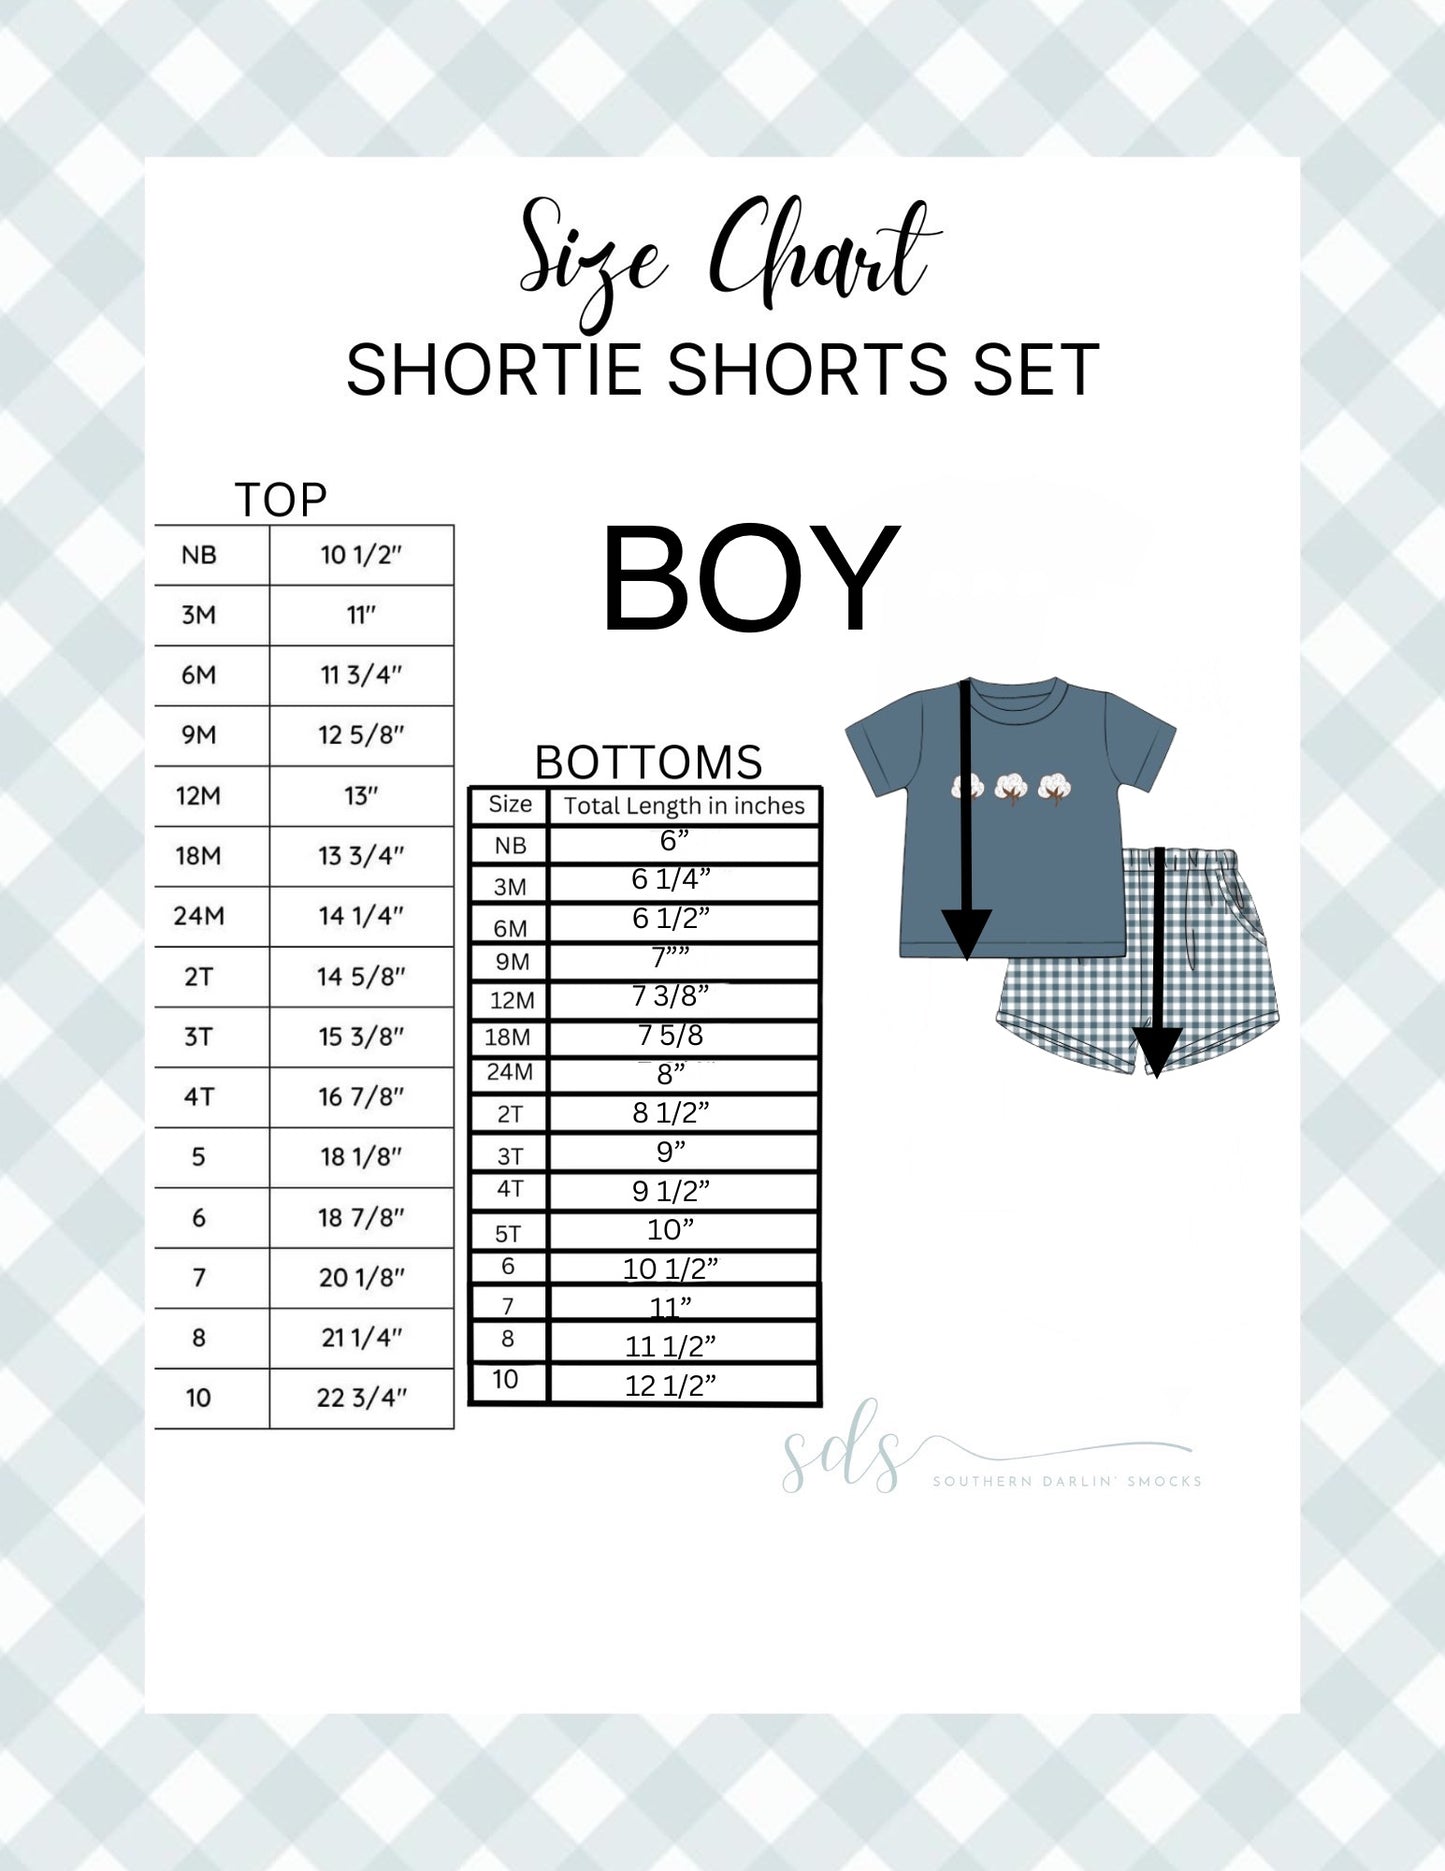 BOY SHORTIE SHORTS SET SIZE CHART